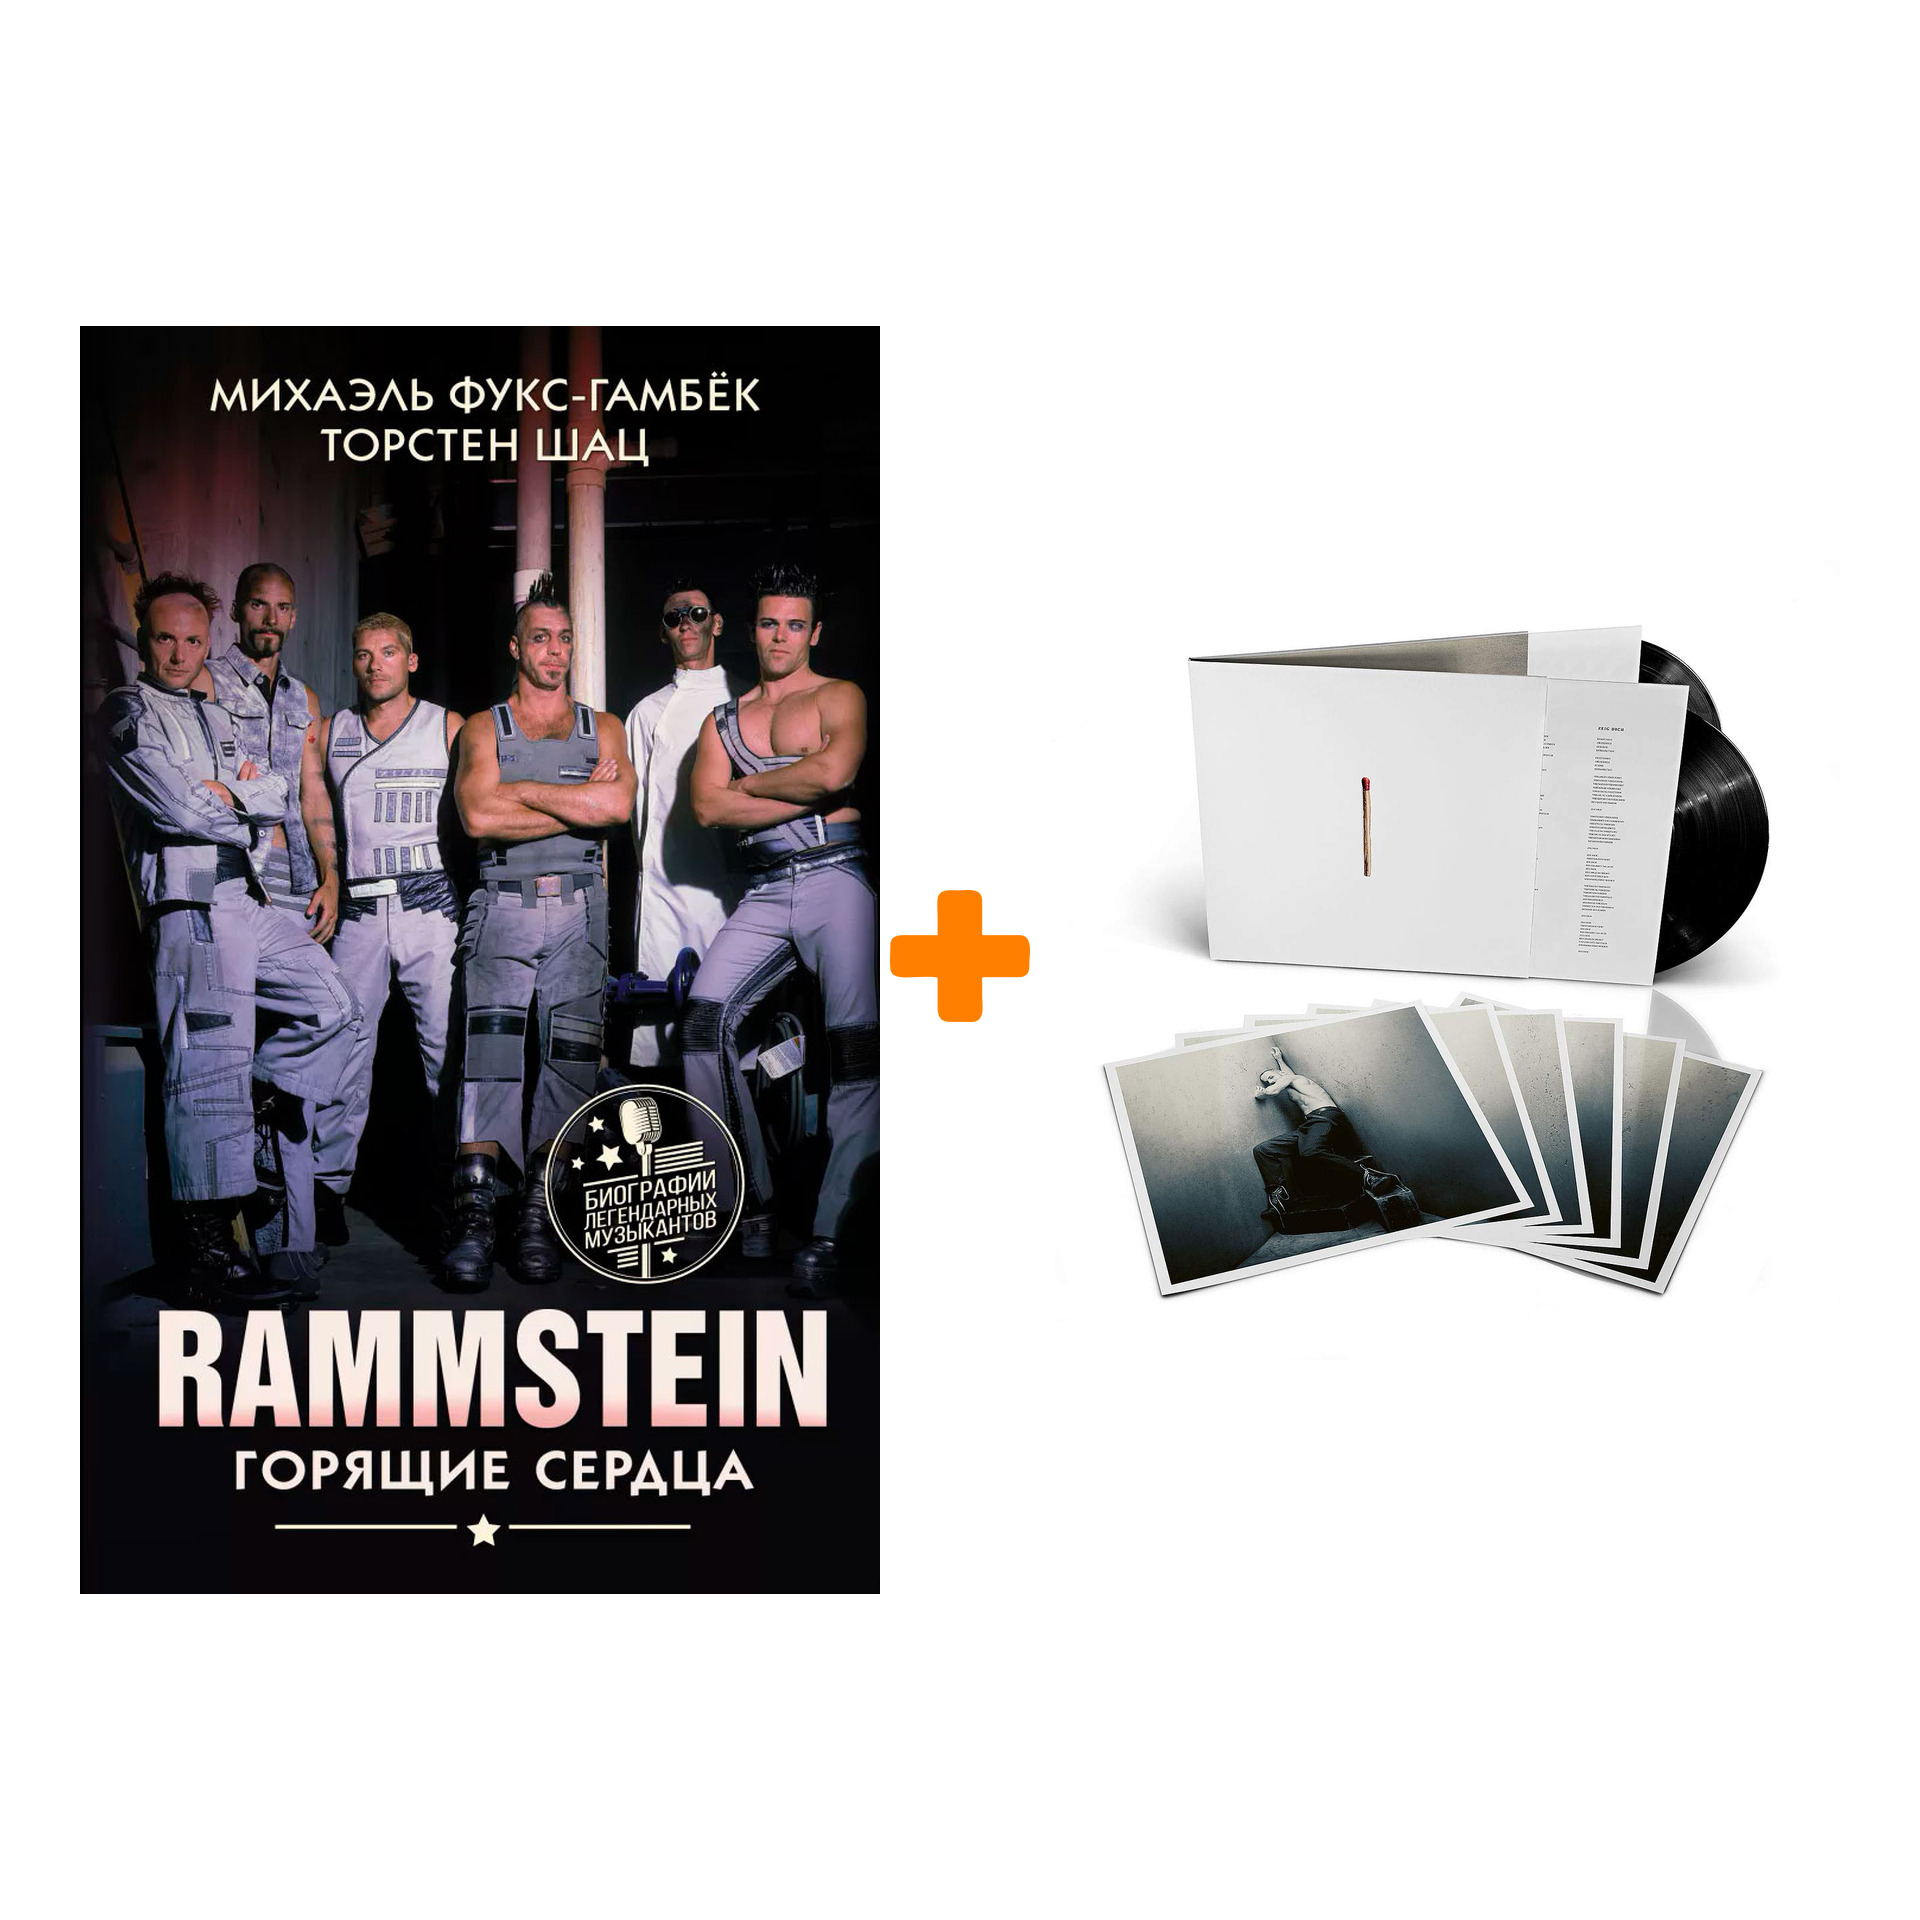 Комплект Rammstein: книга Горящие сердца + винил Rammstein 2LP